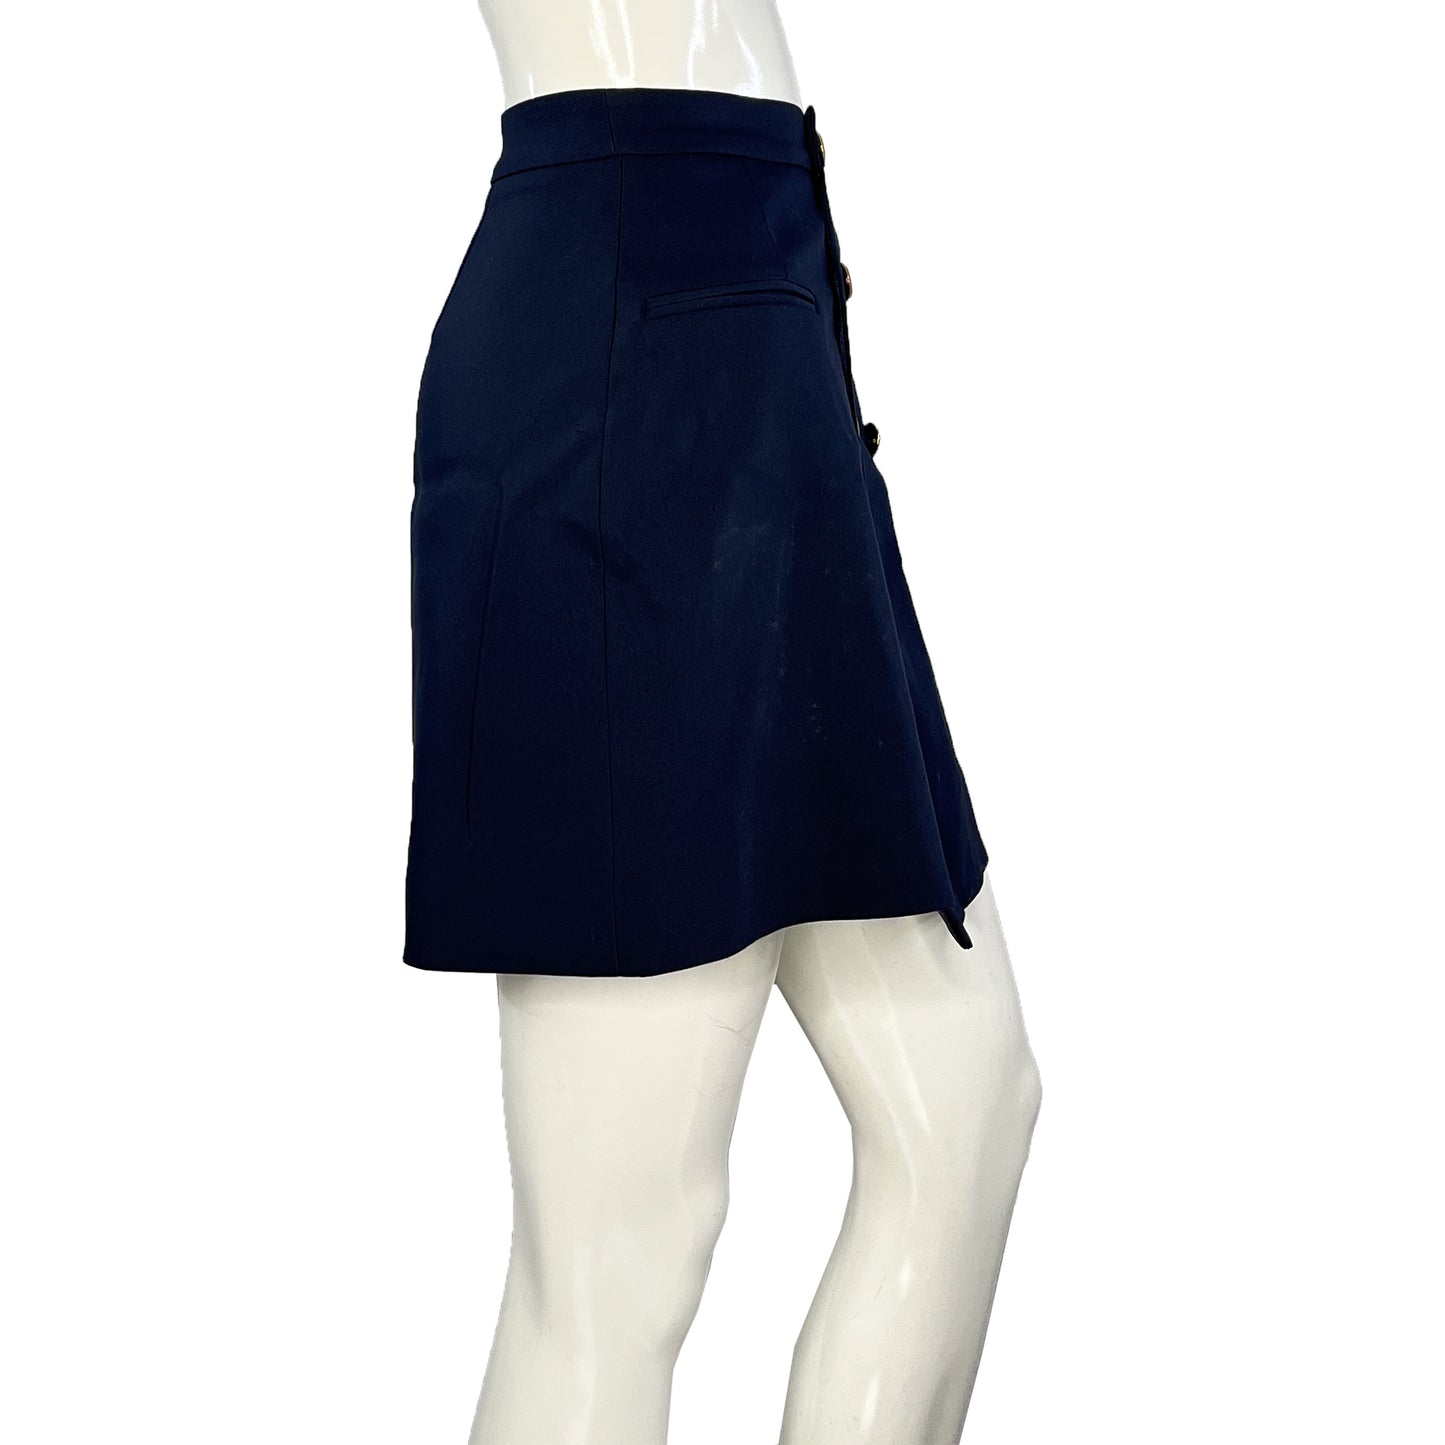 Zara Skirt Mini Asymmetric Gold Buttons Navy Size L SKU 000271-24